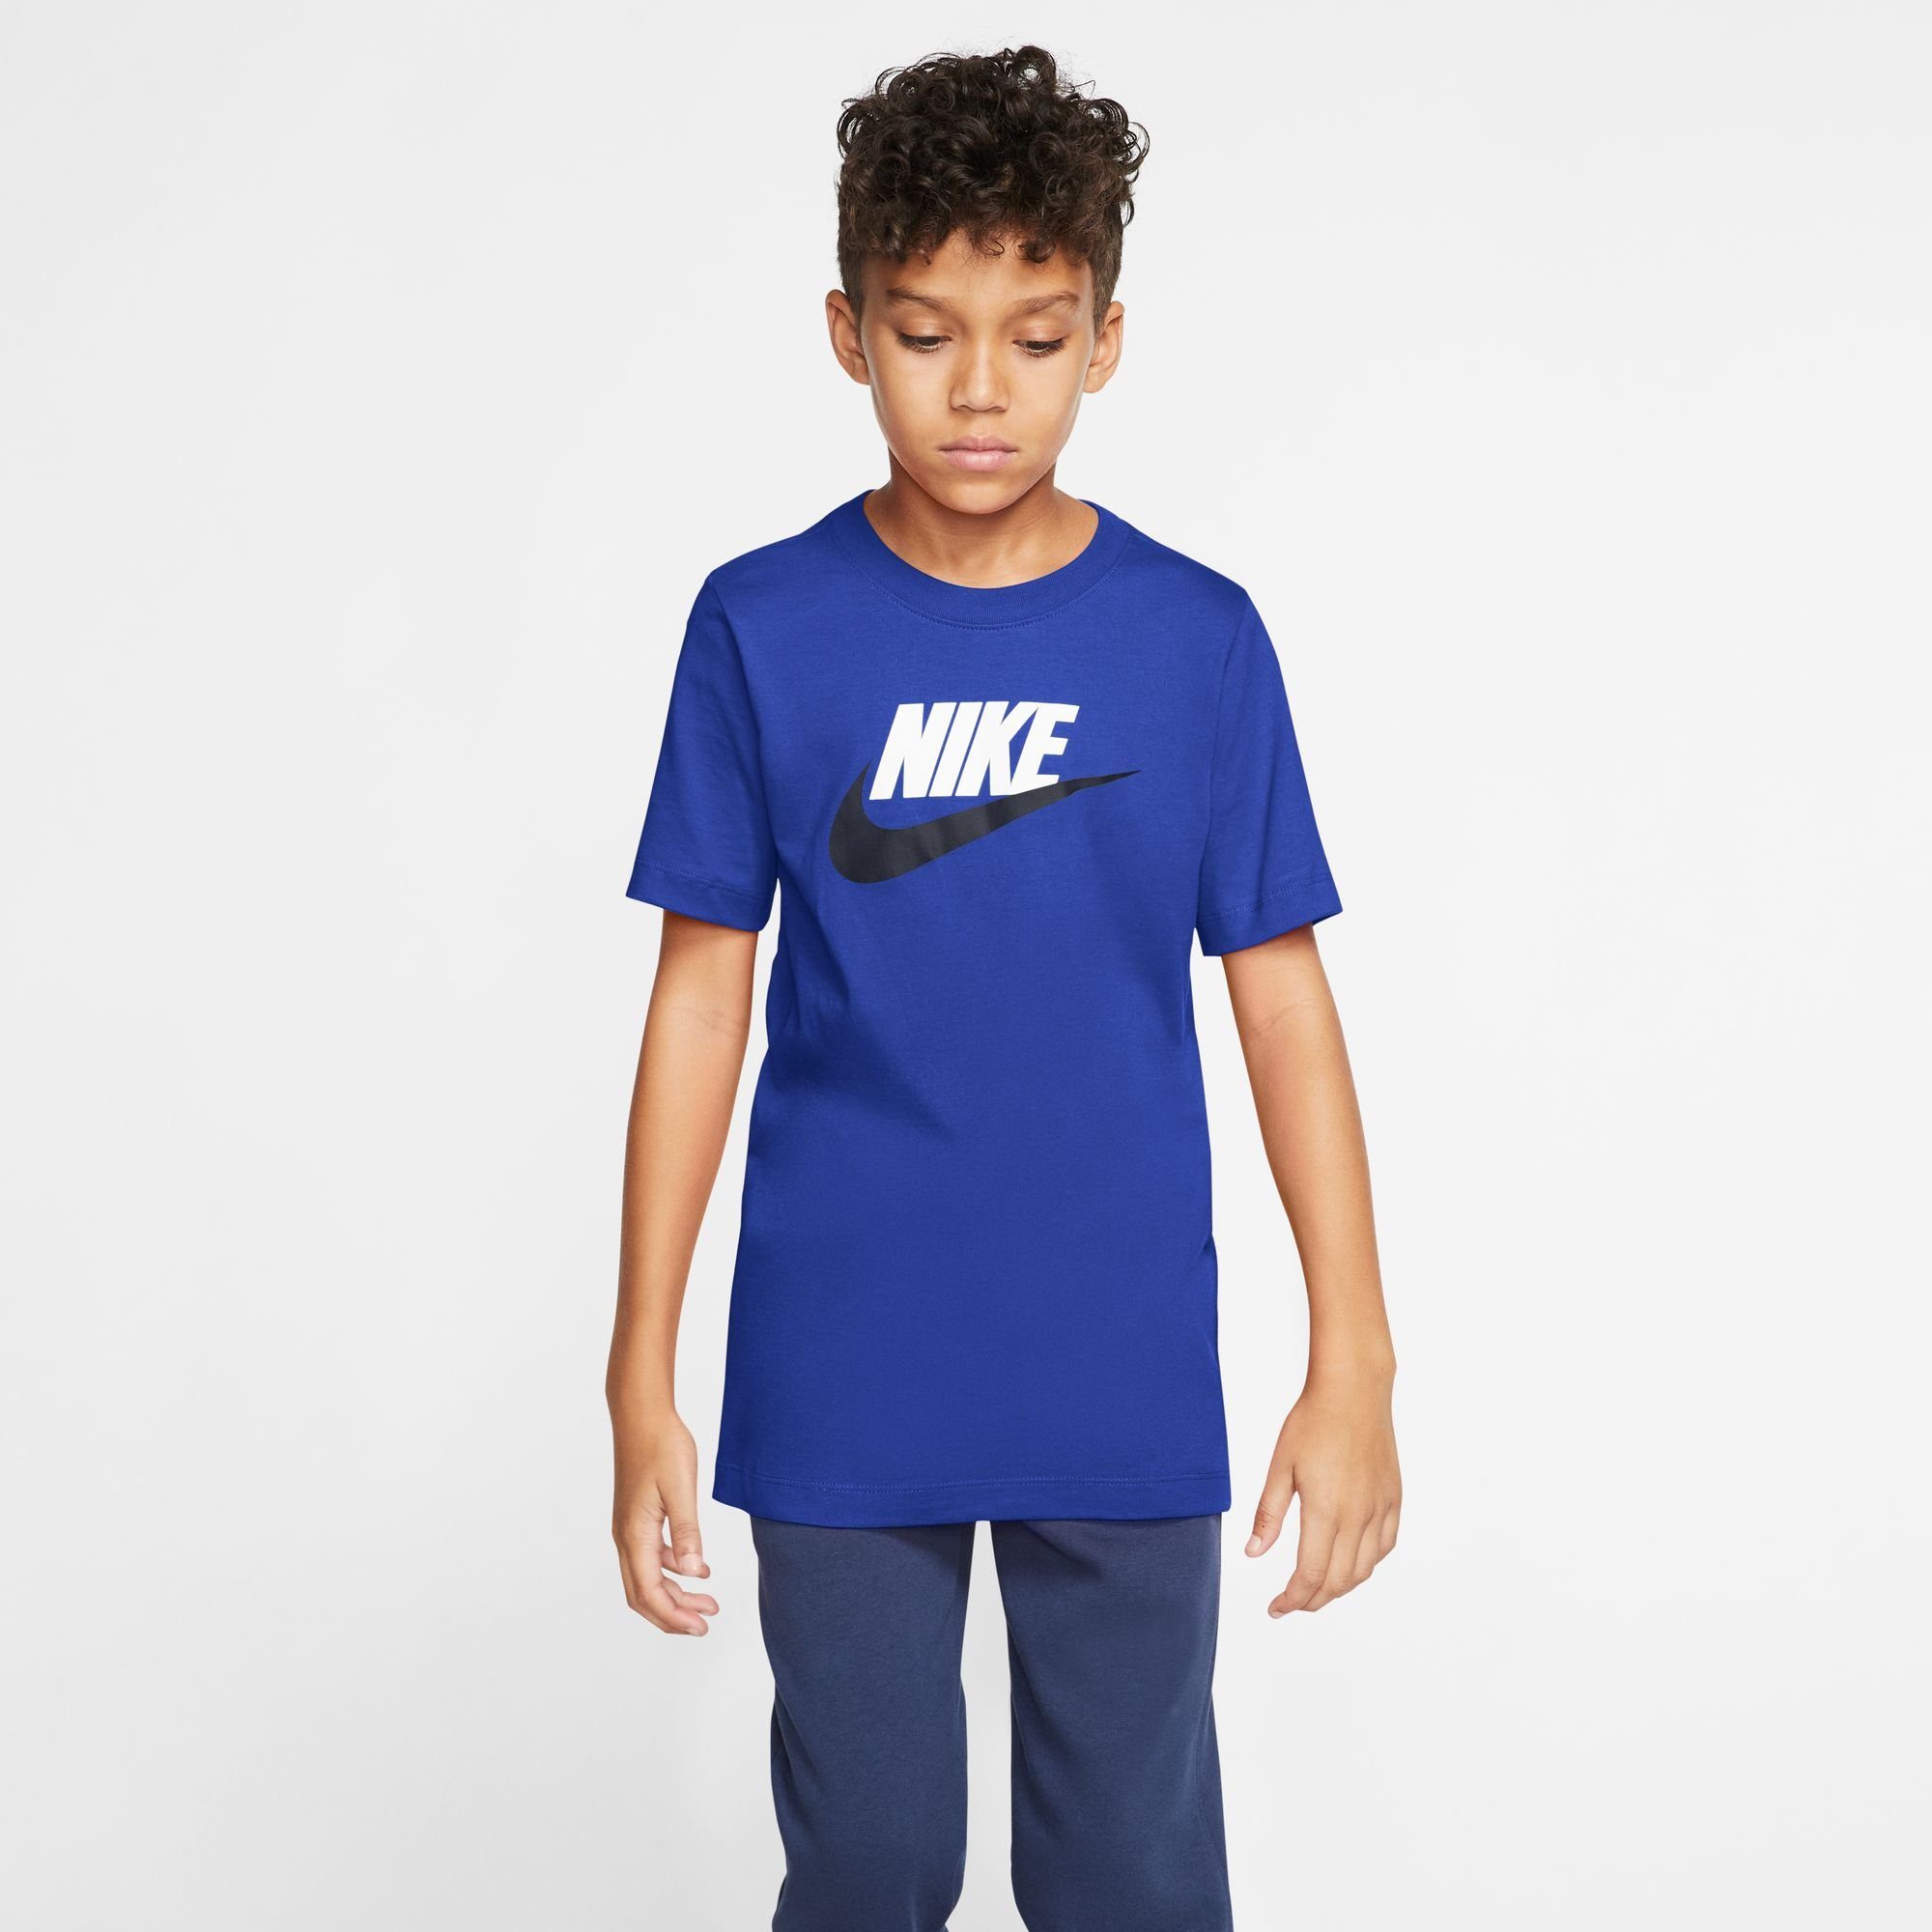 COTTON ROYAL/MIDNIGHT GAME NAVY T-SHIRT BIG Nike T-Shirt Sportswear KIDS'